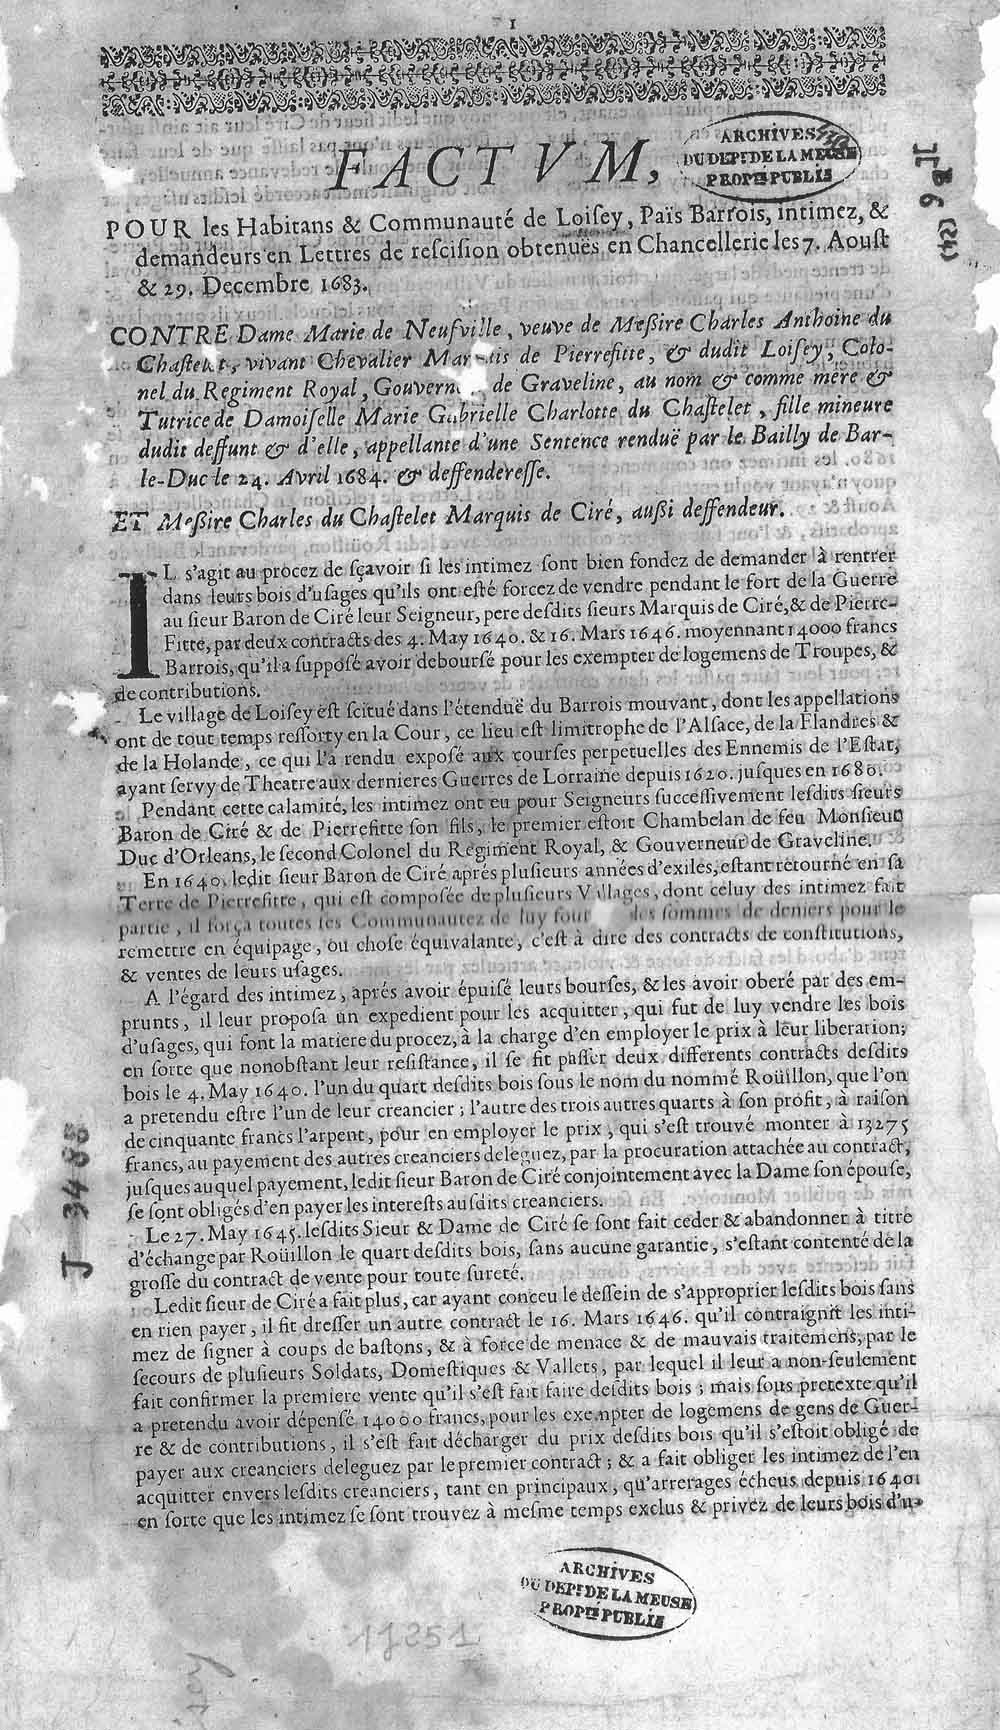 Factum de loisey en 1684